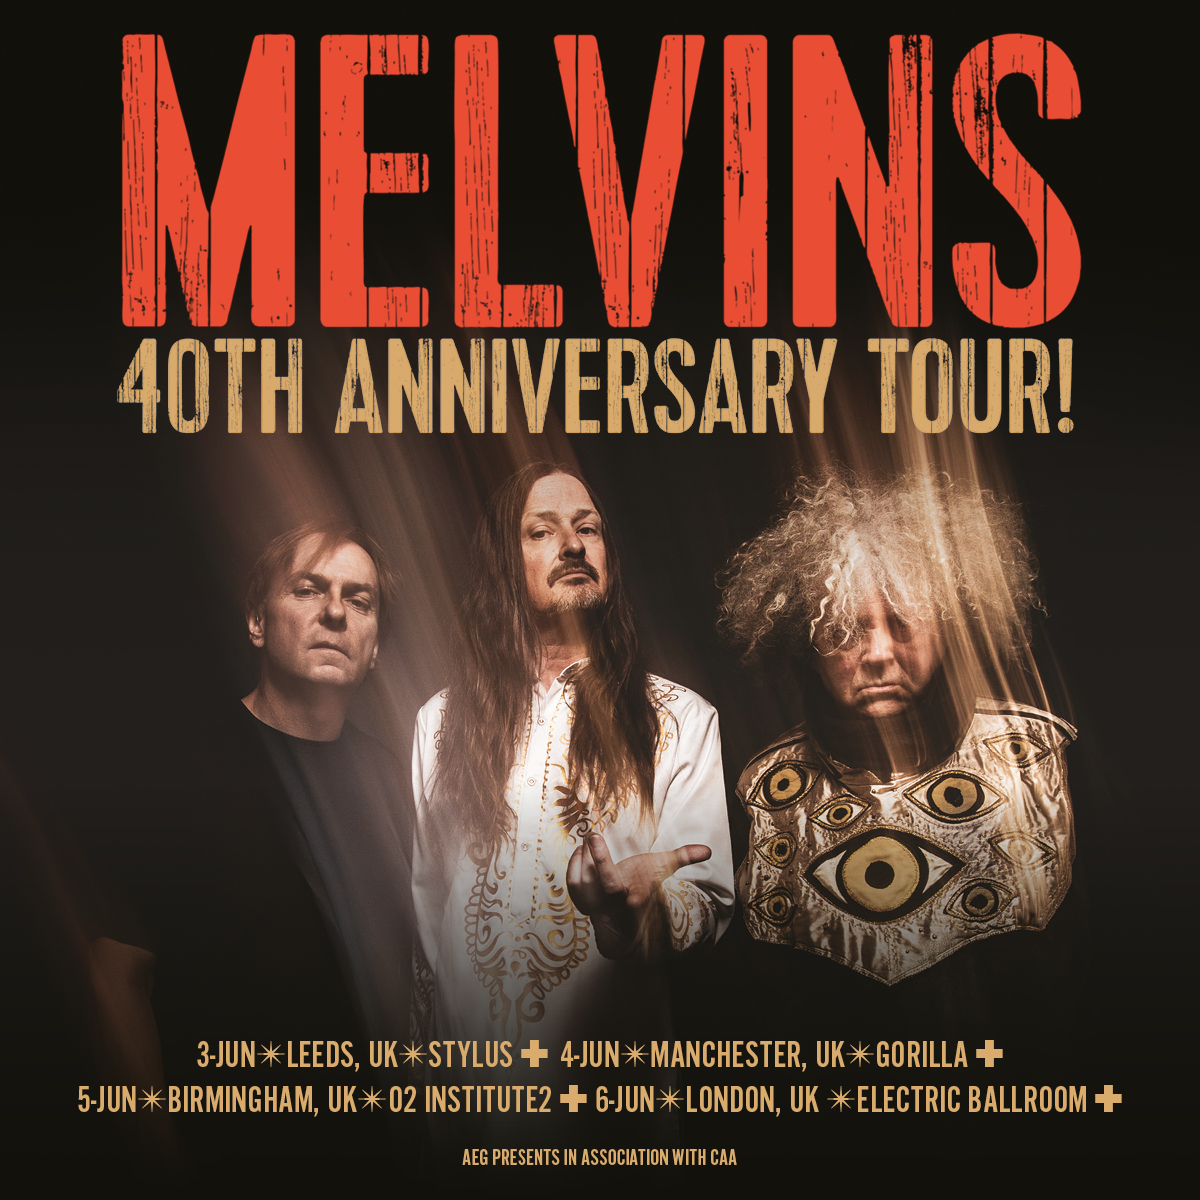 Melvins 40th Anniversary Tour! Electric Ballroom Camden Iconic